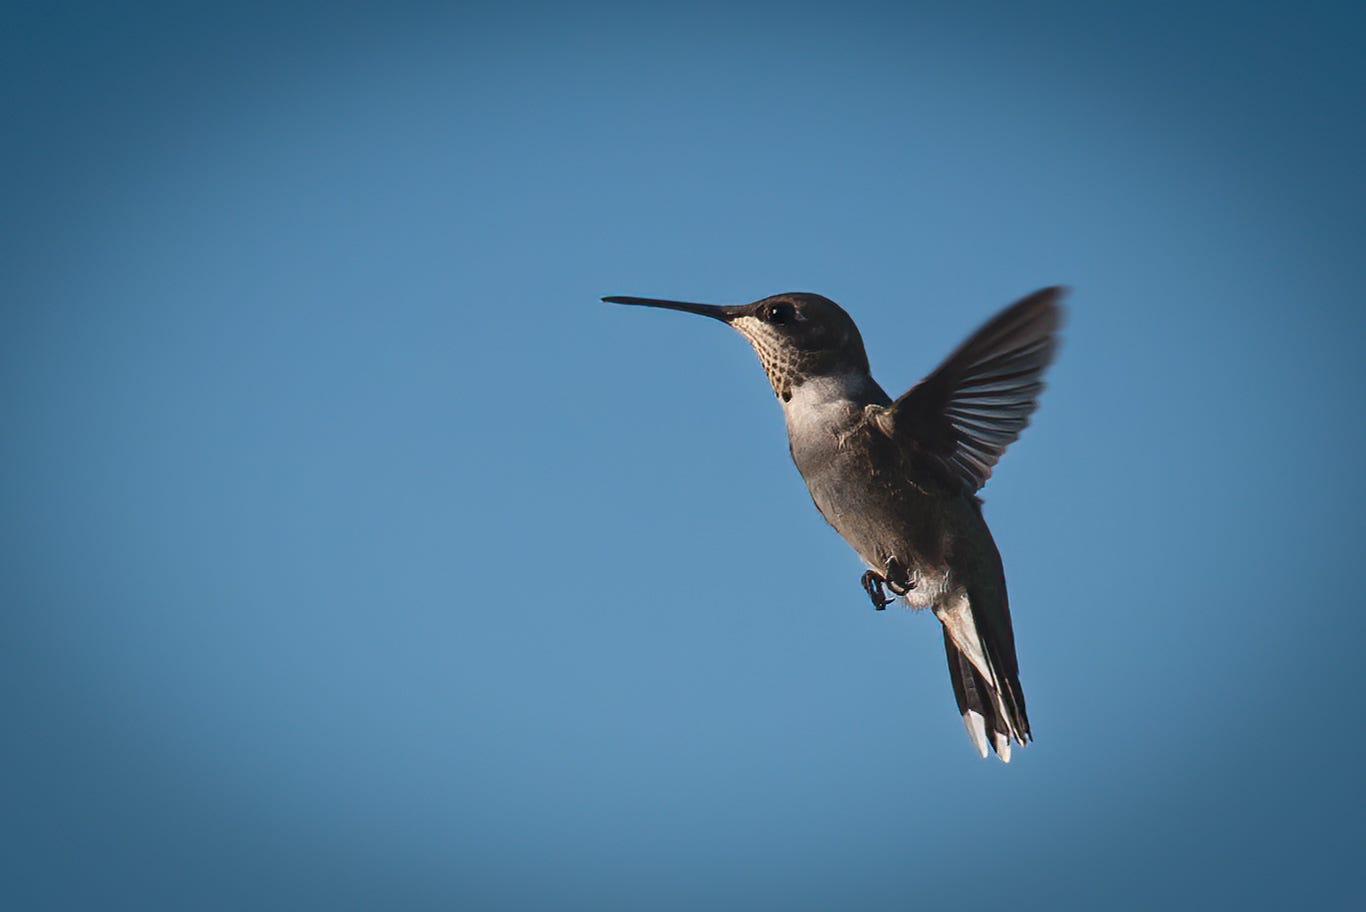 A  Rufous female hummingbird in flight against a blue sky